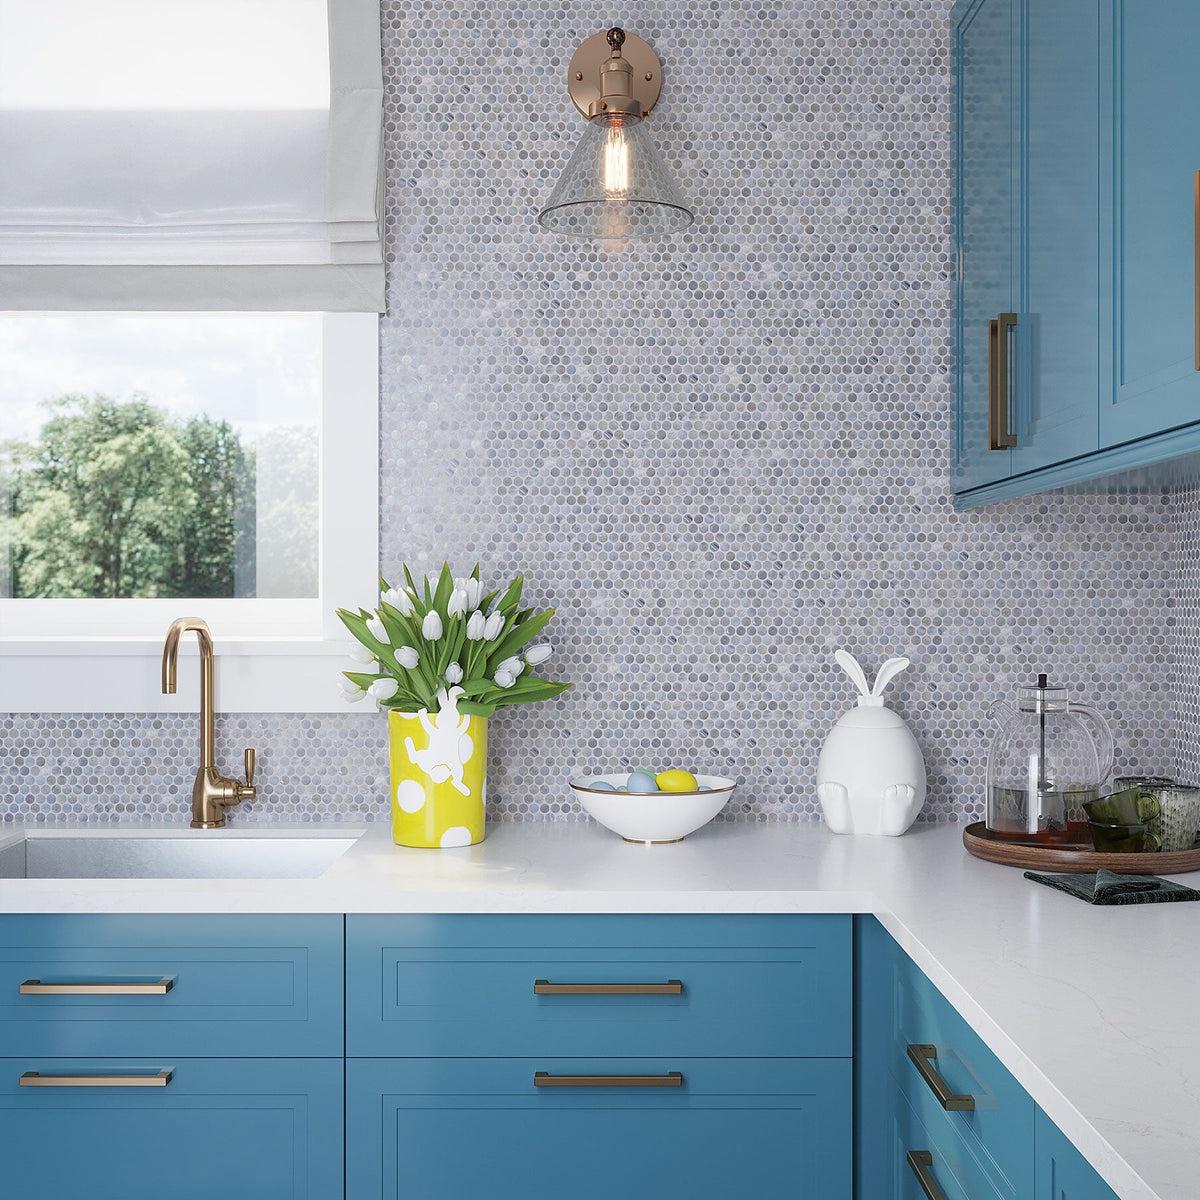 Gray backsplash penny round tile with blue kitchen cabinets